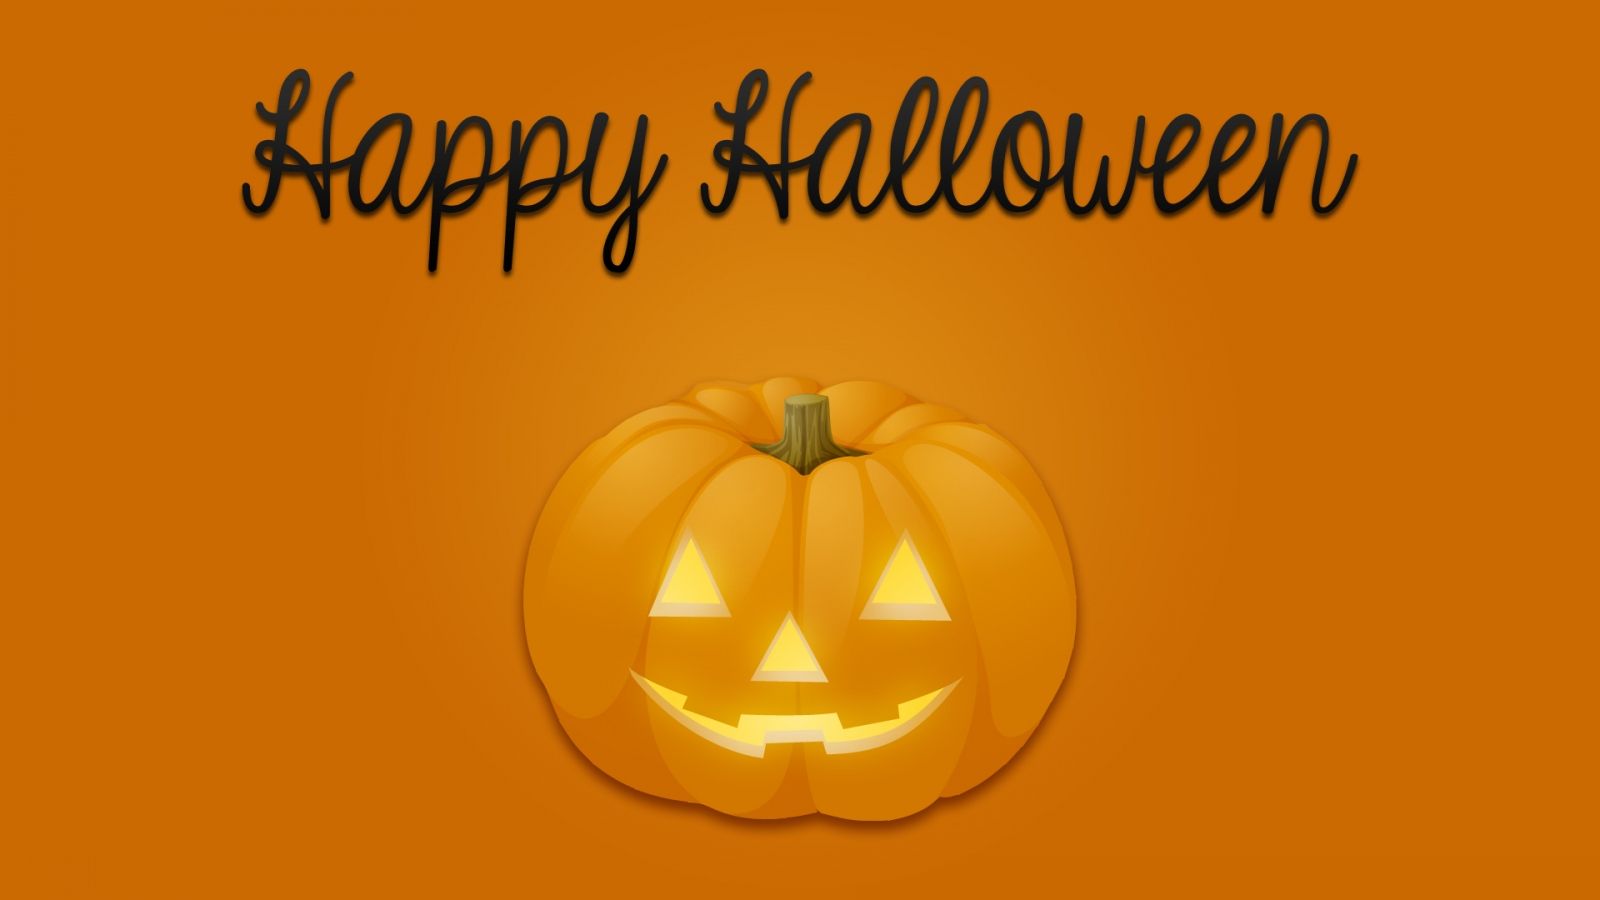 cute halloween wallpaper 15758. Halloween wishes, Halloween greetings, Happy halloween quotes